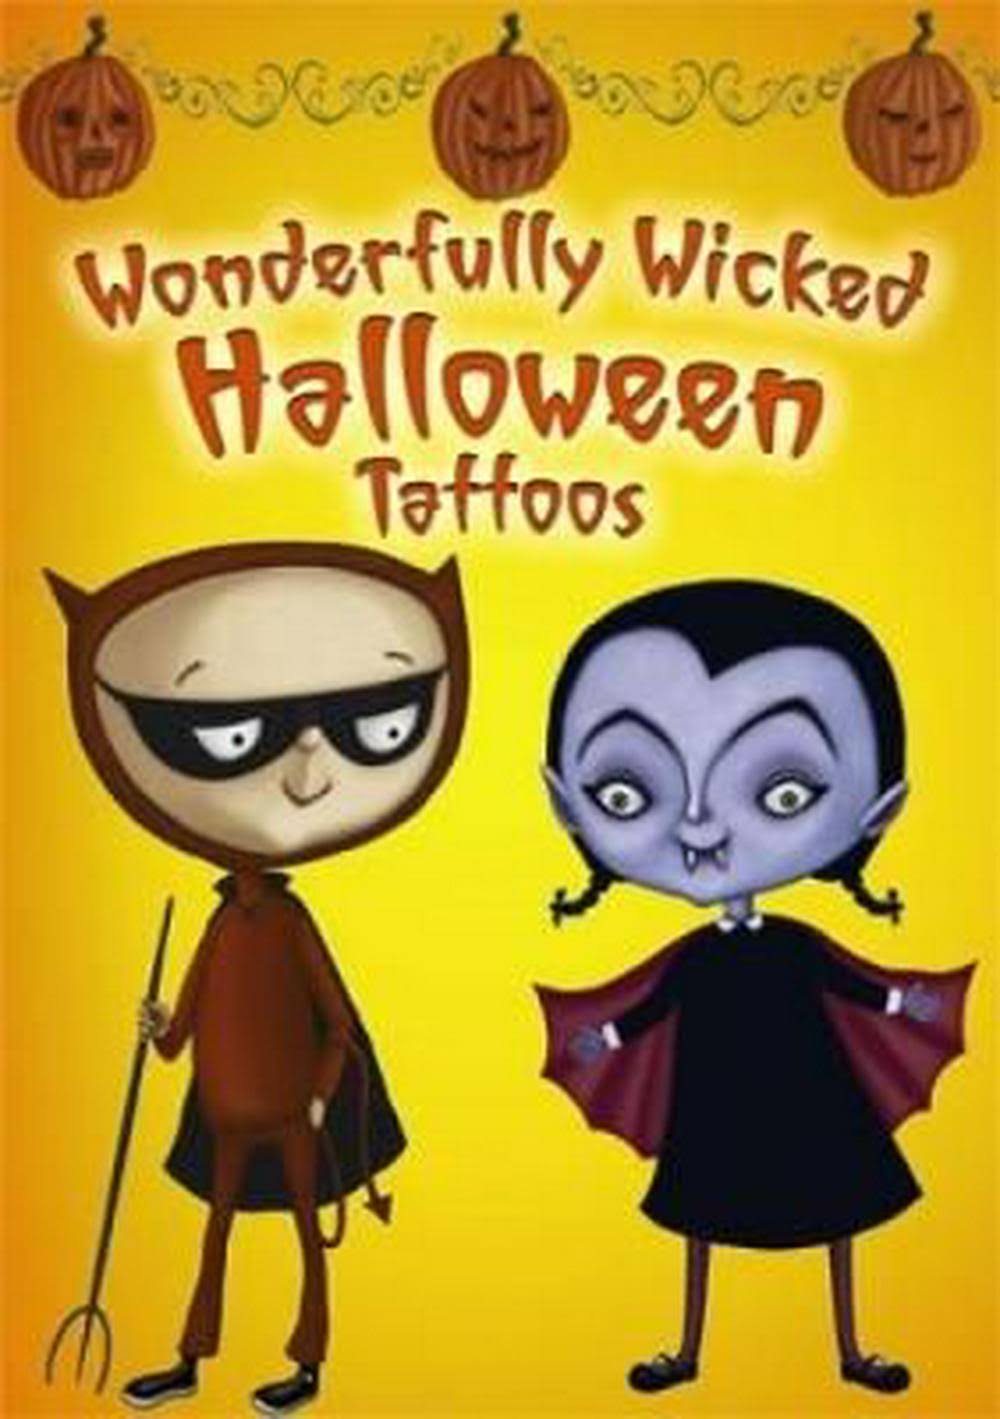 Wonderfully Wicked Halloween Tattoos [Book]